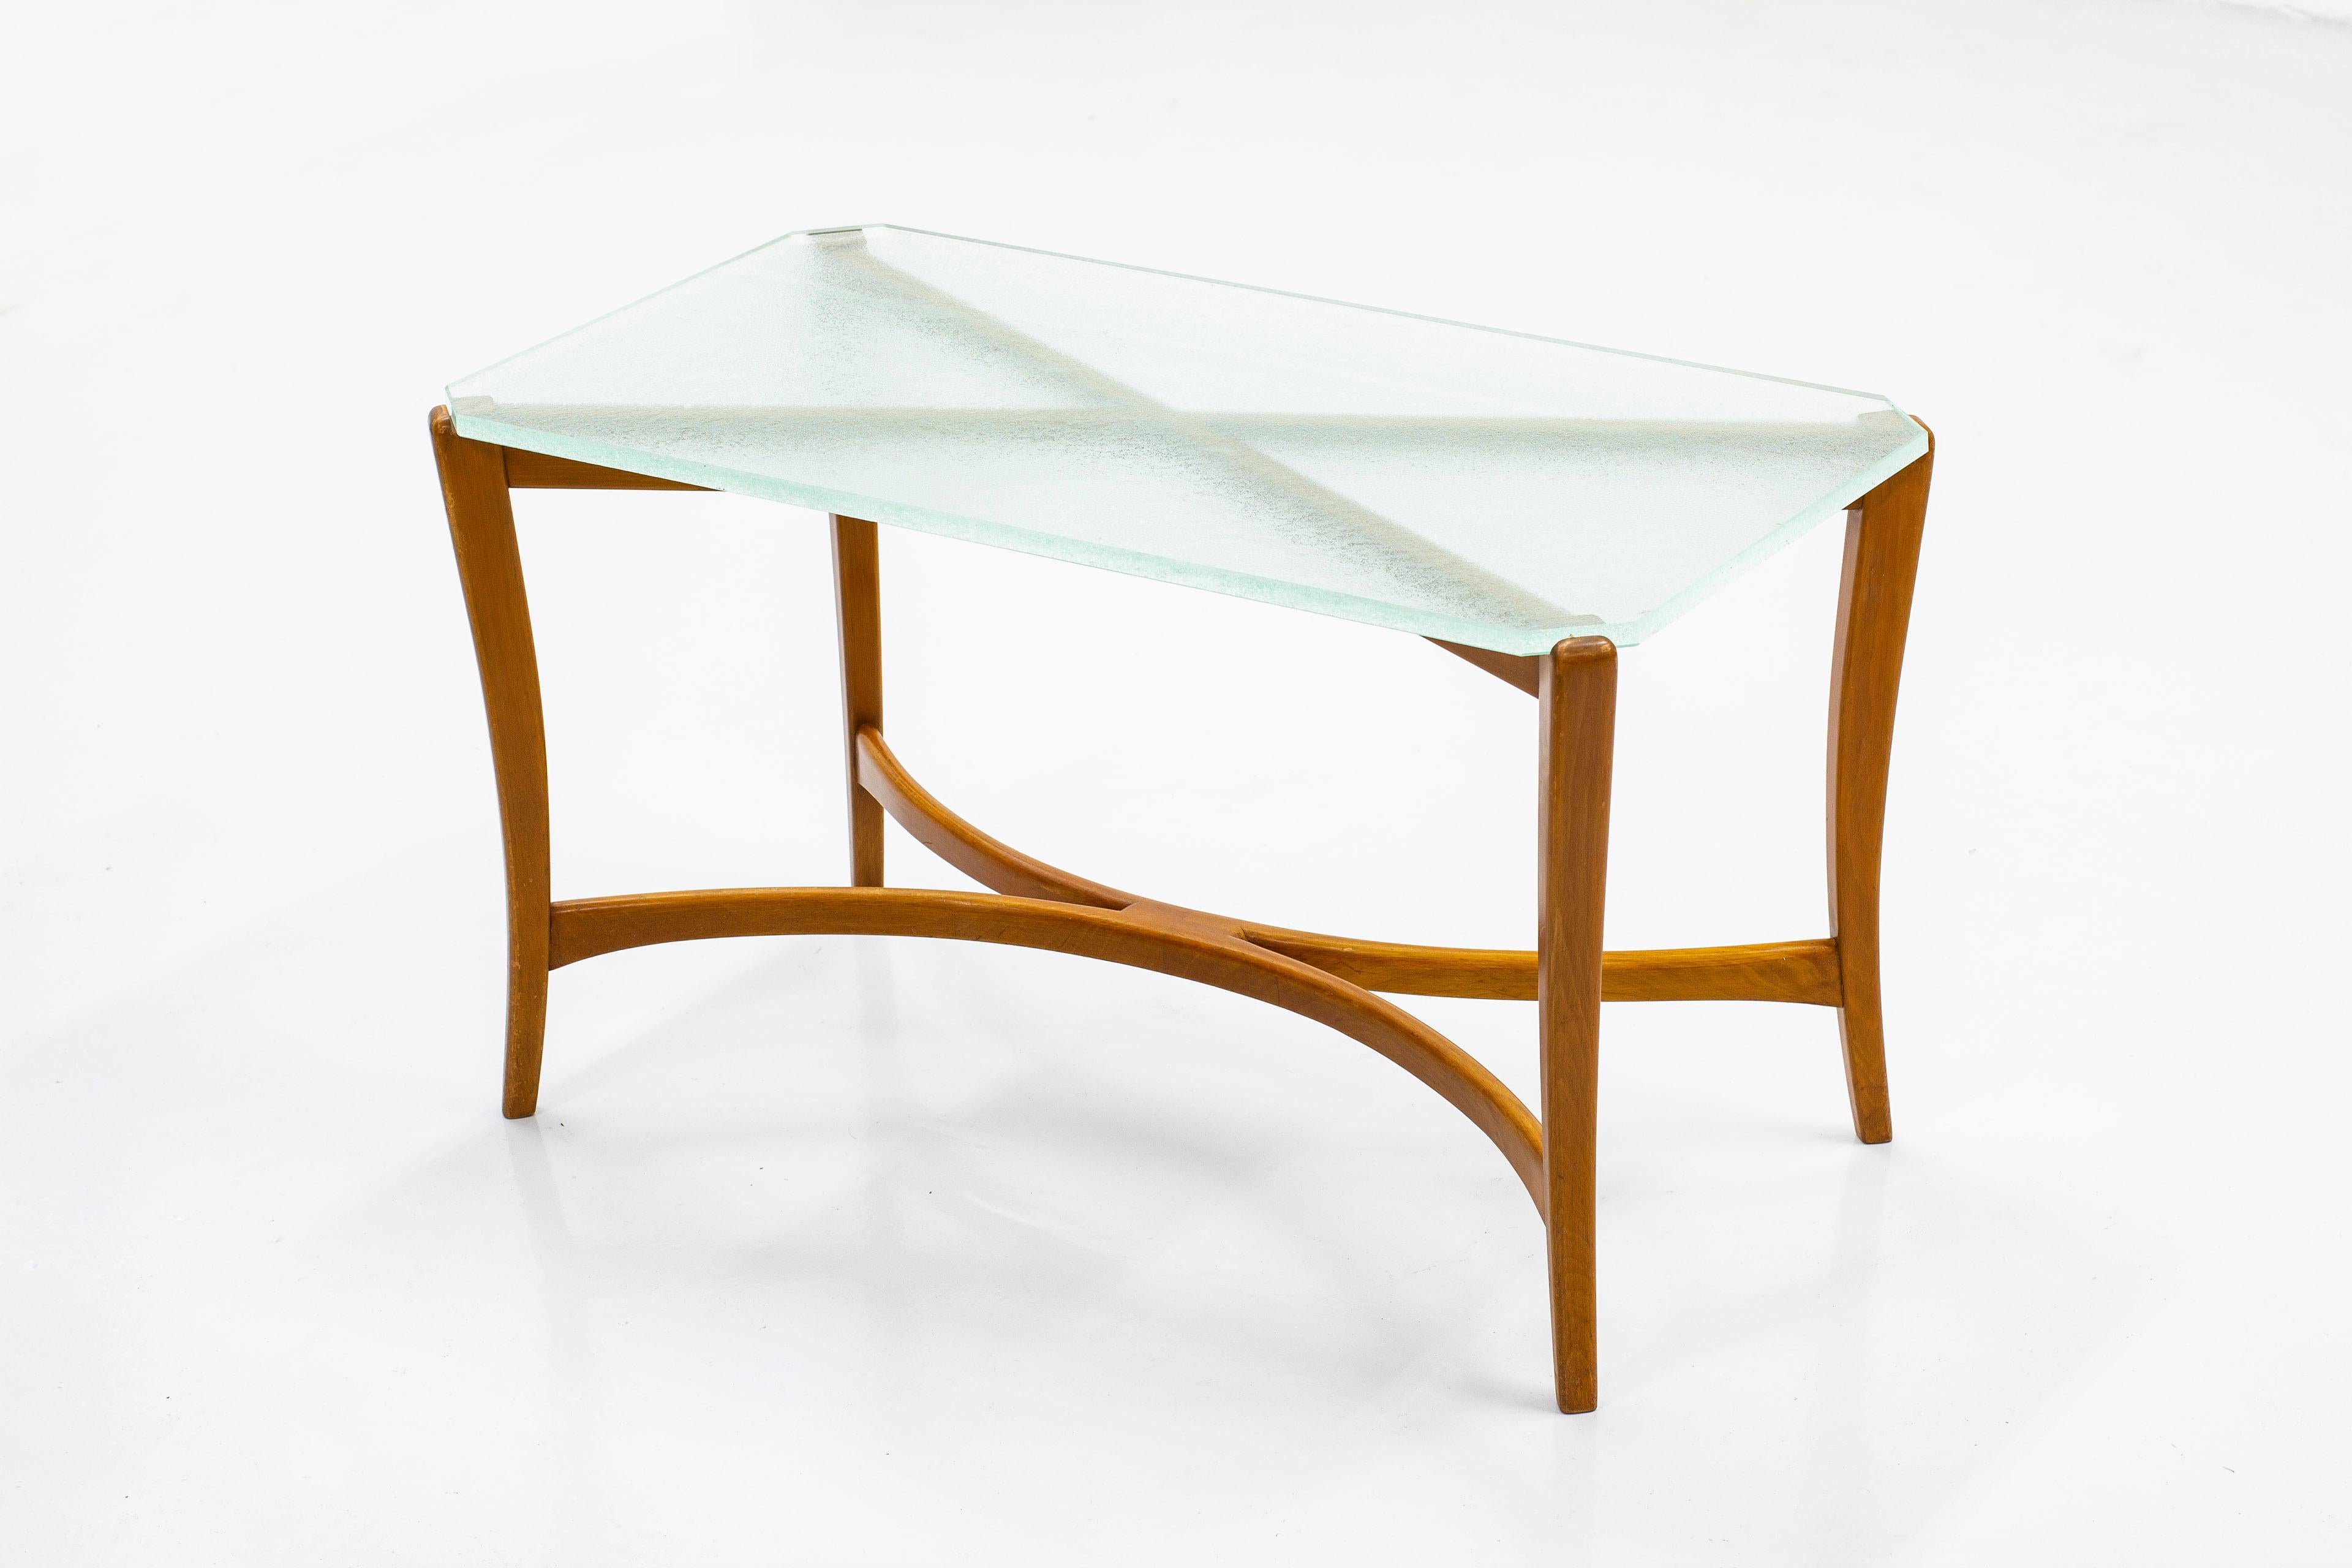 Scandinavian Modern Swedish Modern Wood and Glass Sofa Table by Nordiska Kompaniet, Sweden, 1939 For Sale